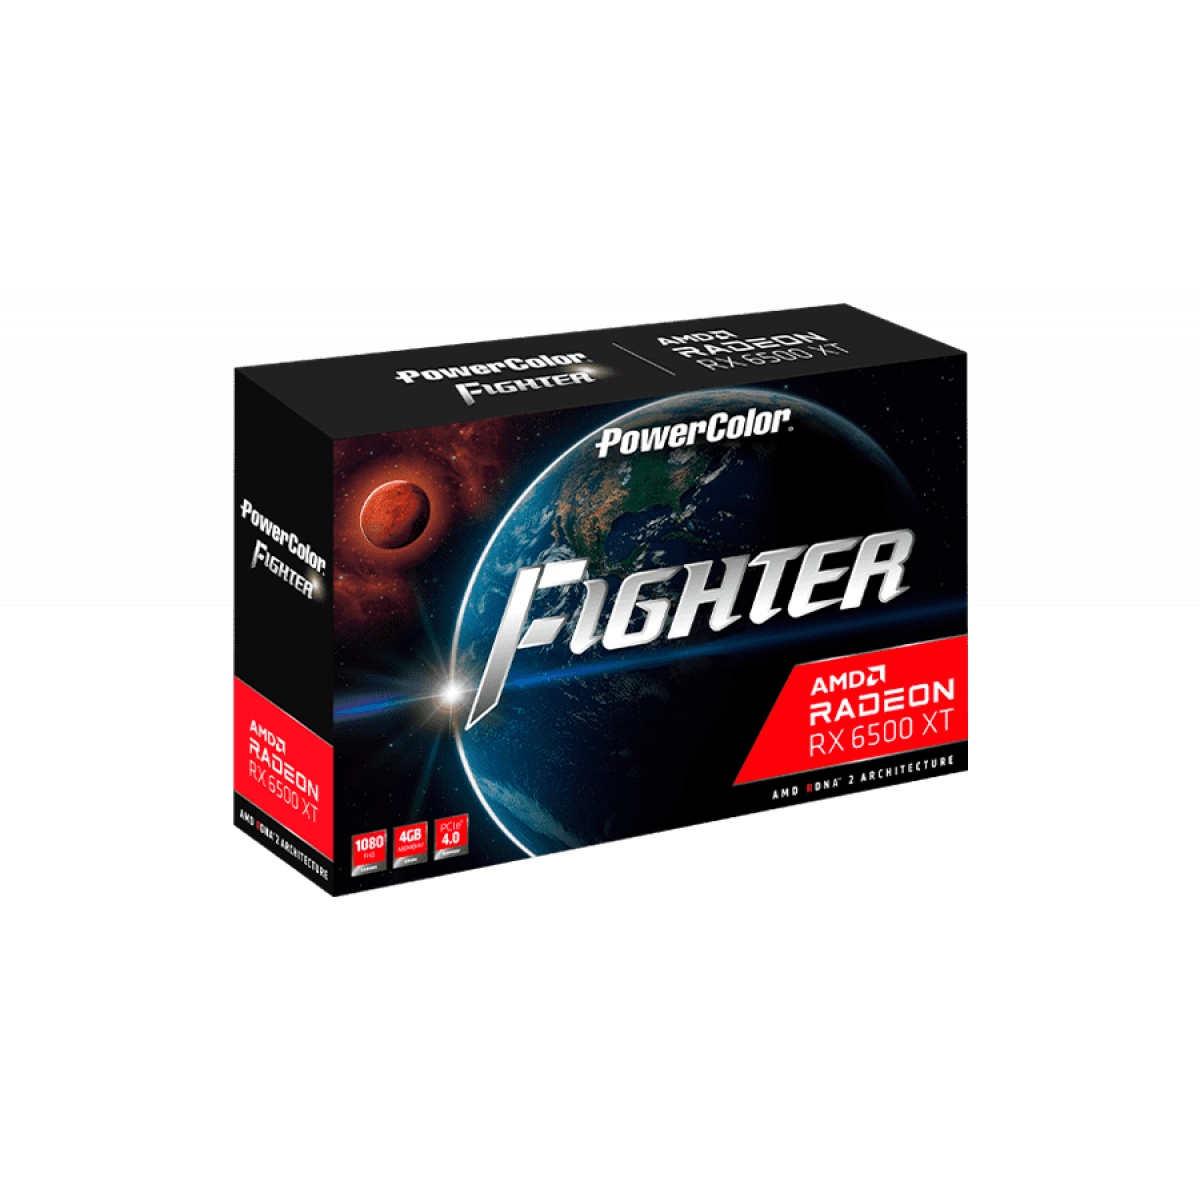 VGA PowerColor Fighter AMD Radeon™ RX 6500 XT 4GB GDDR6